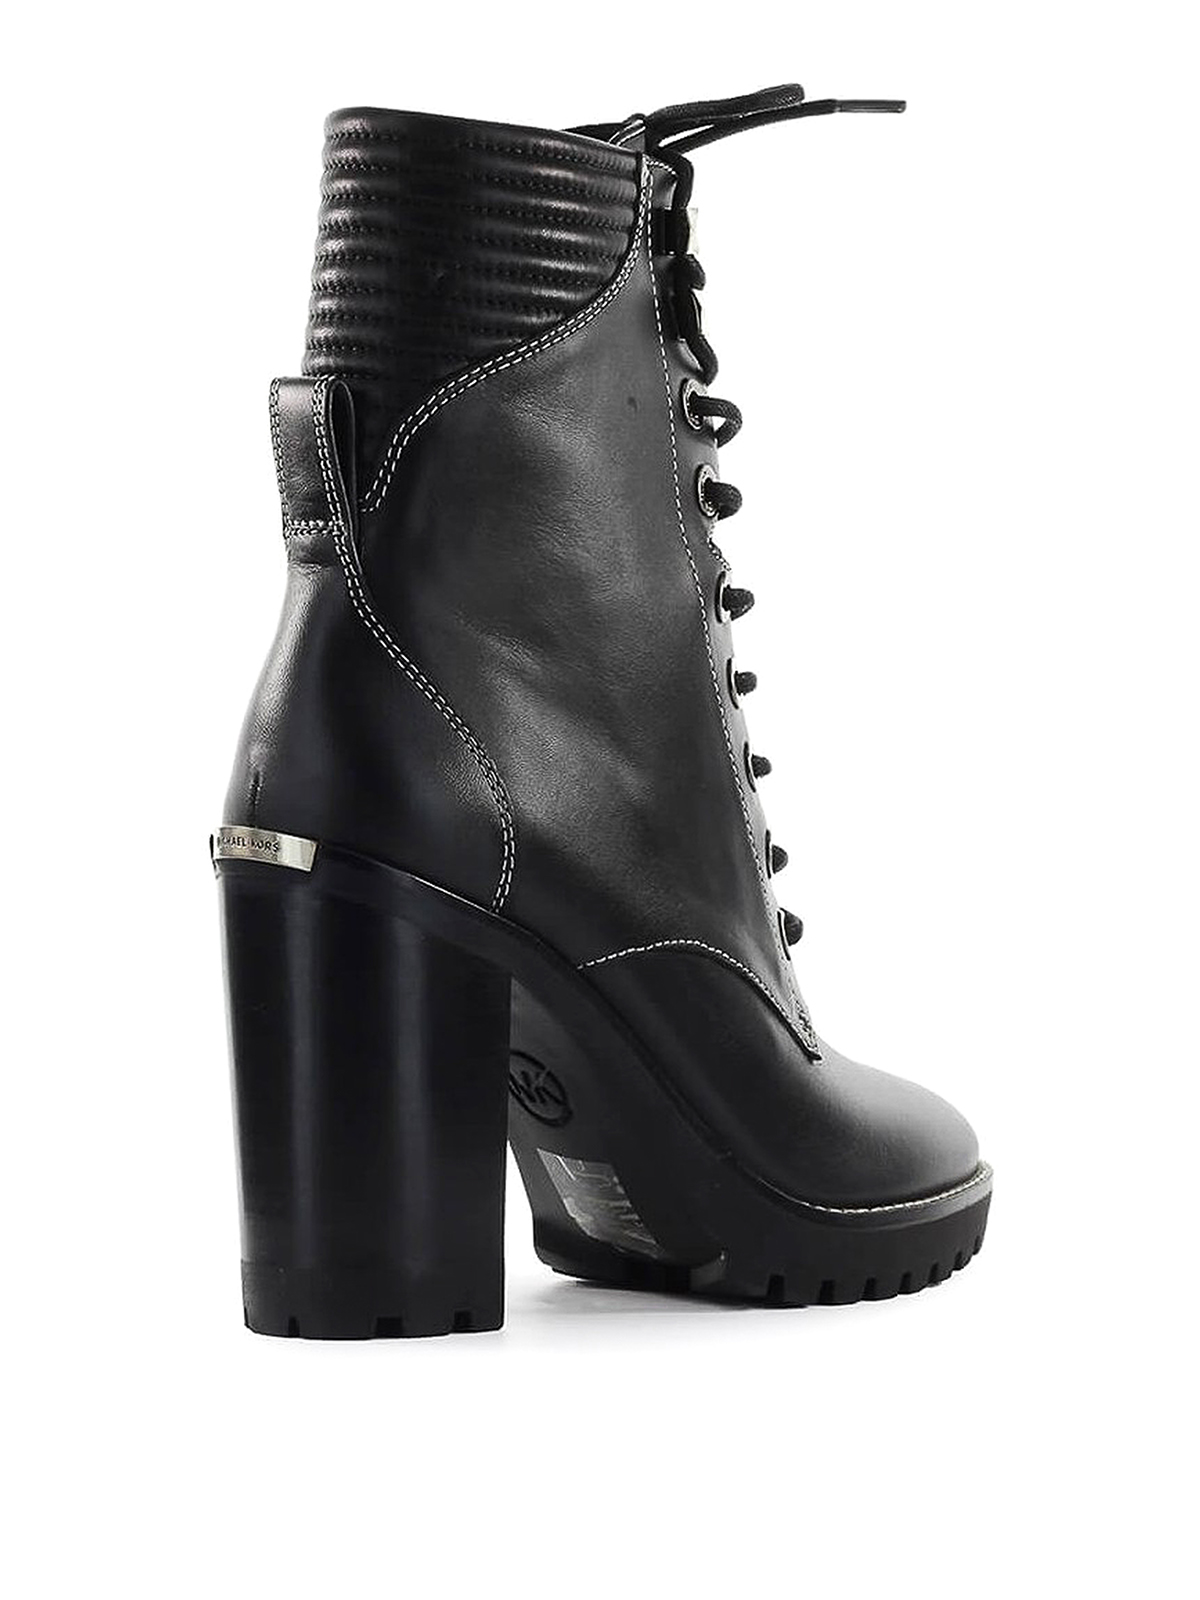 Michael Kors  Shoes  Michael Kors Lace Up Boots  Poshmark